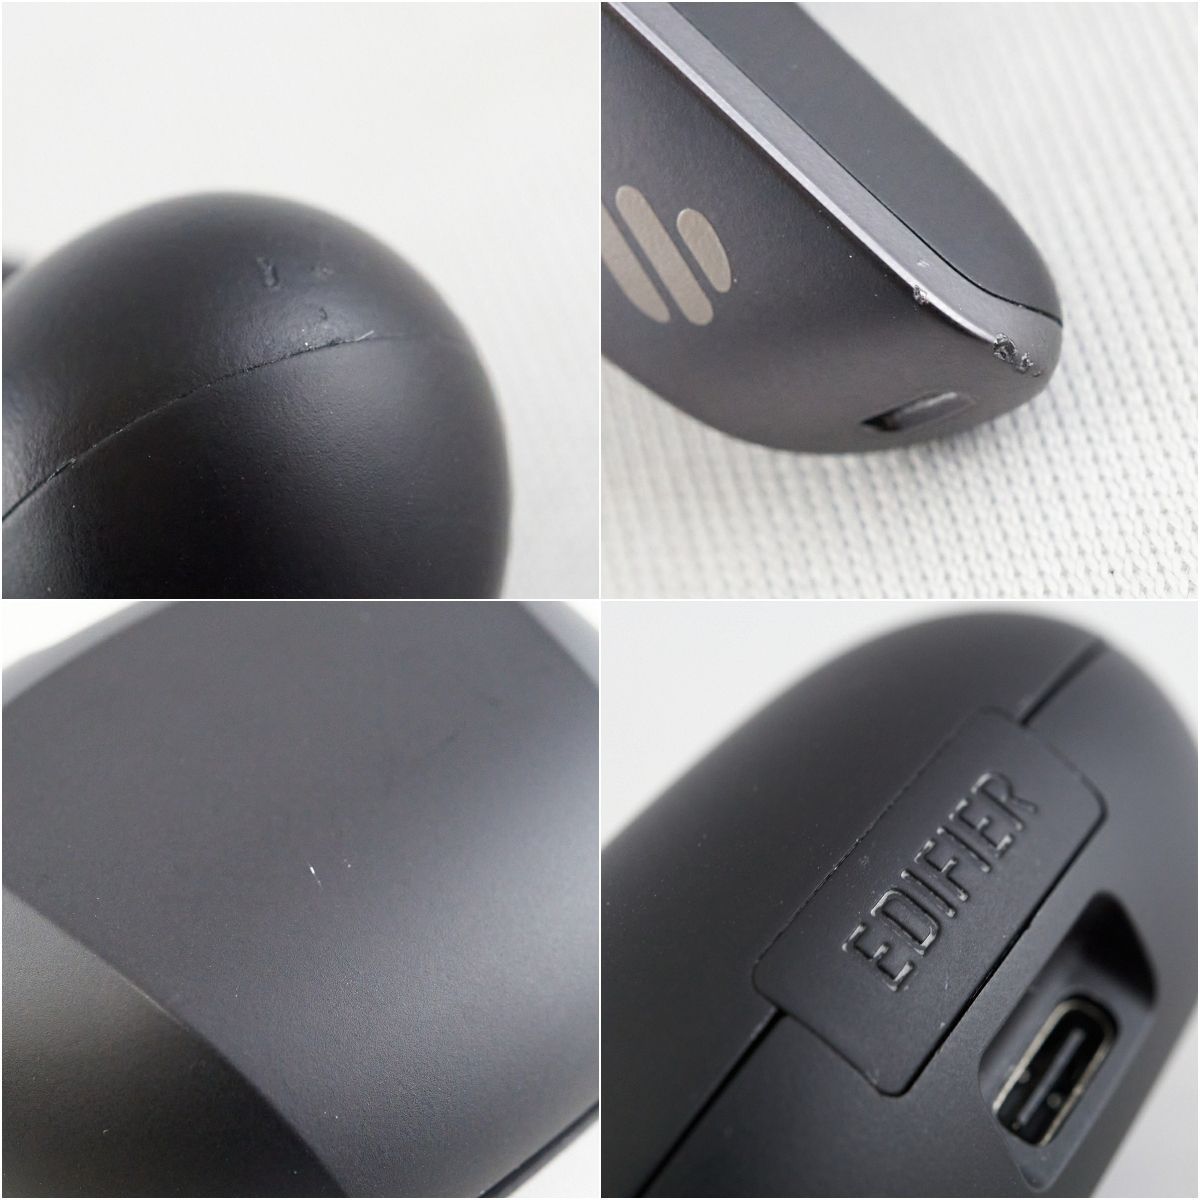 EDIFIER NeoBuds Pro 完全ワイヤレスイヤホン USED美品 エディファイア ノイズキャンセリング 外音取込 IP54 防水防塵  完動品 S V8383